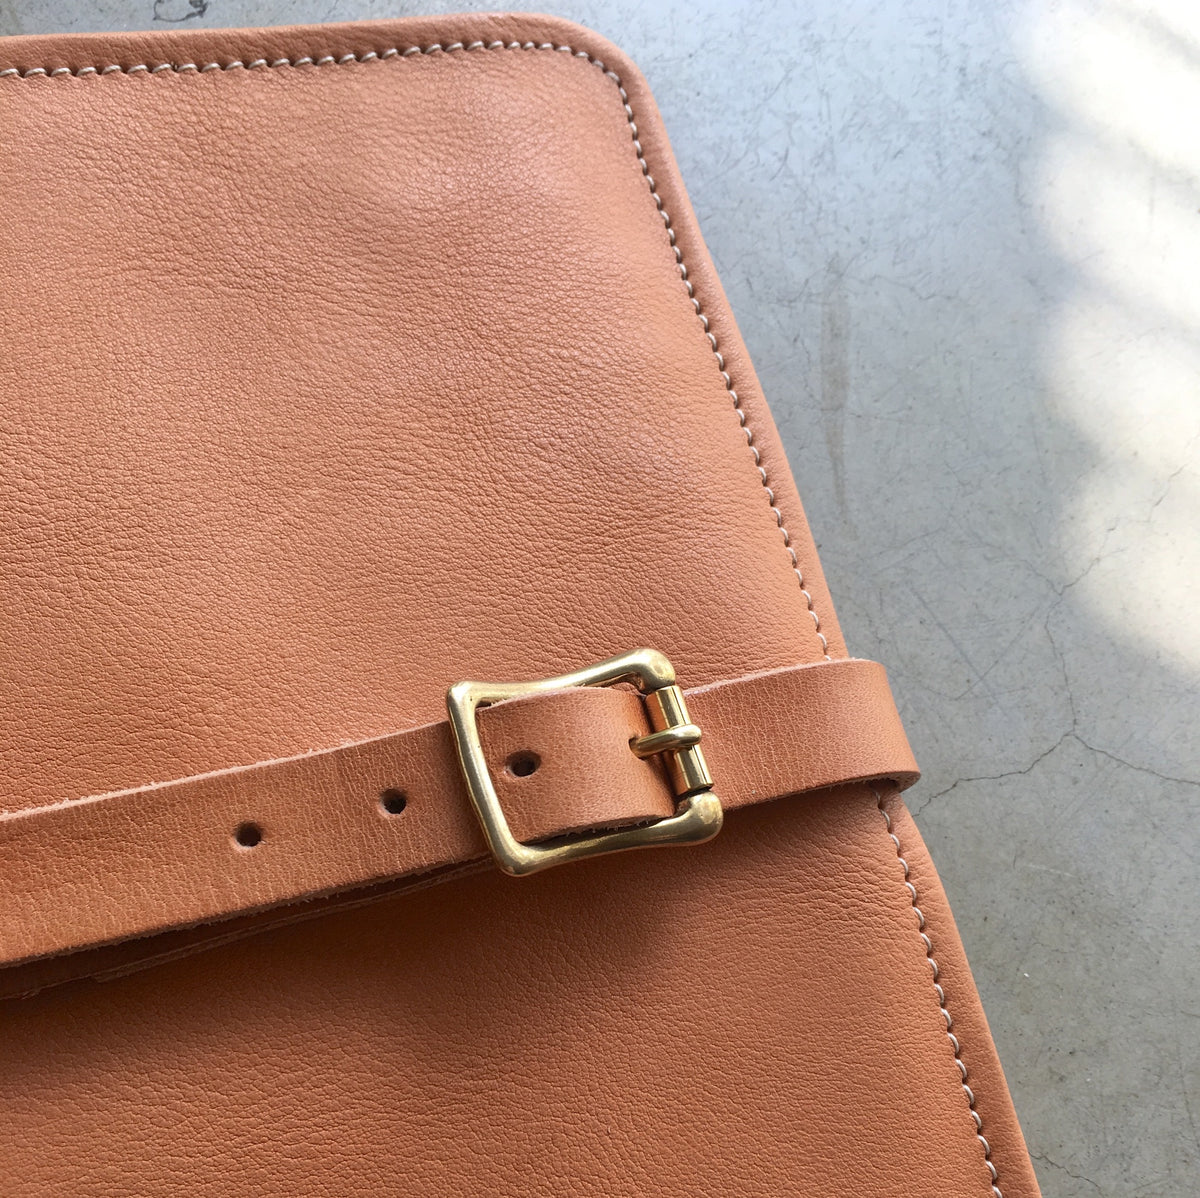 The Superior Labor Leather Zip Key Case (5 colours) - NOMADO Store